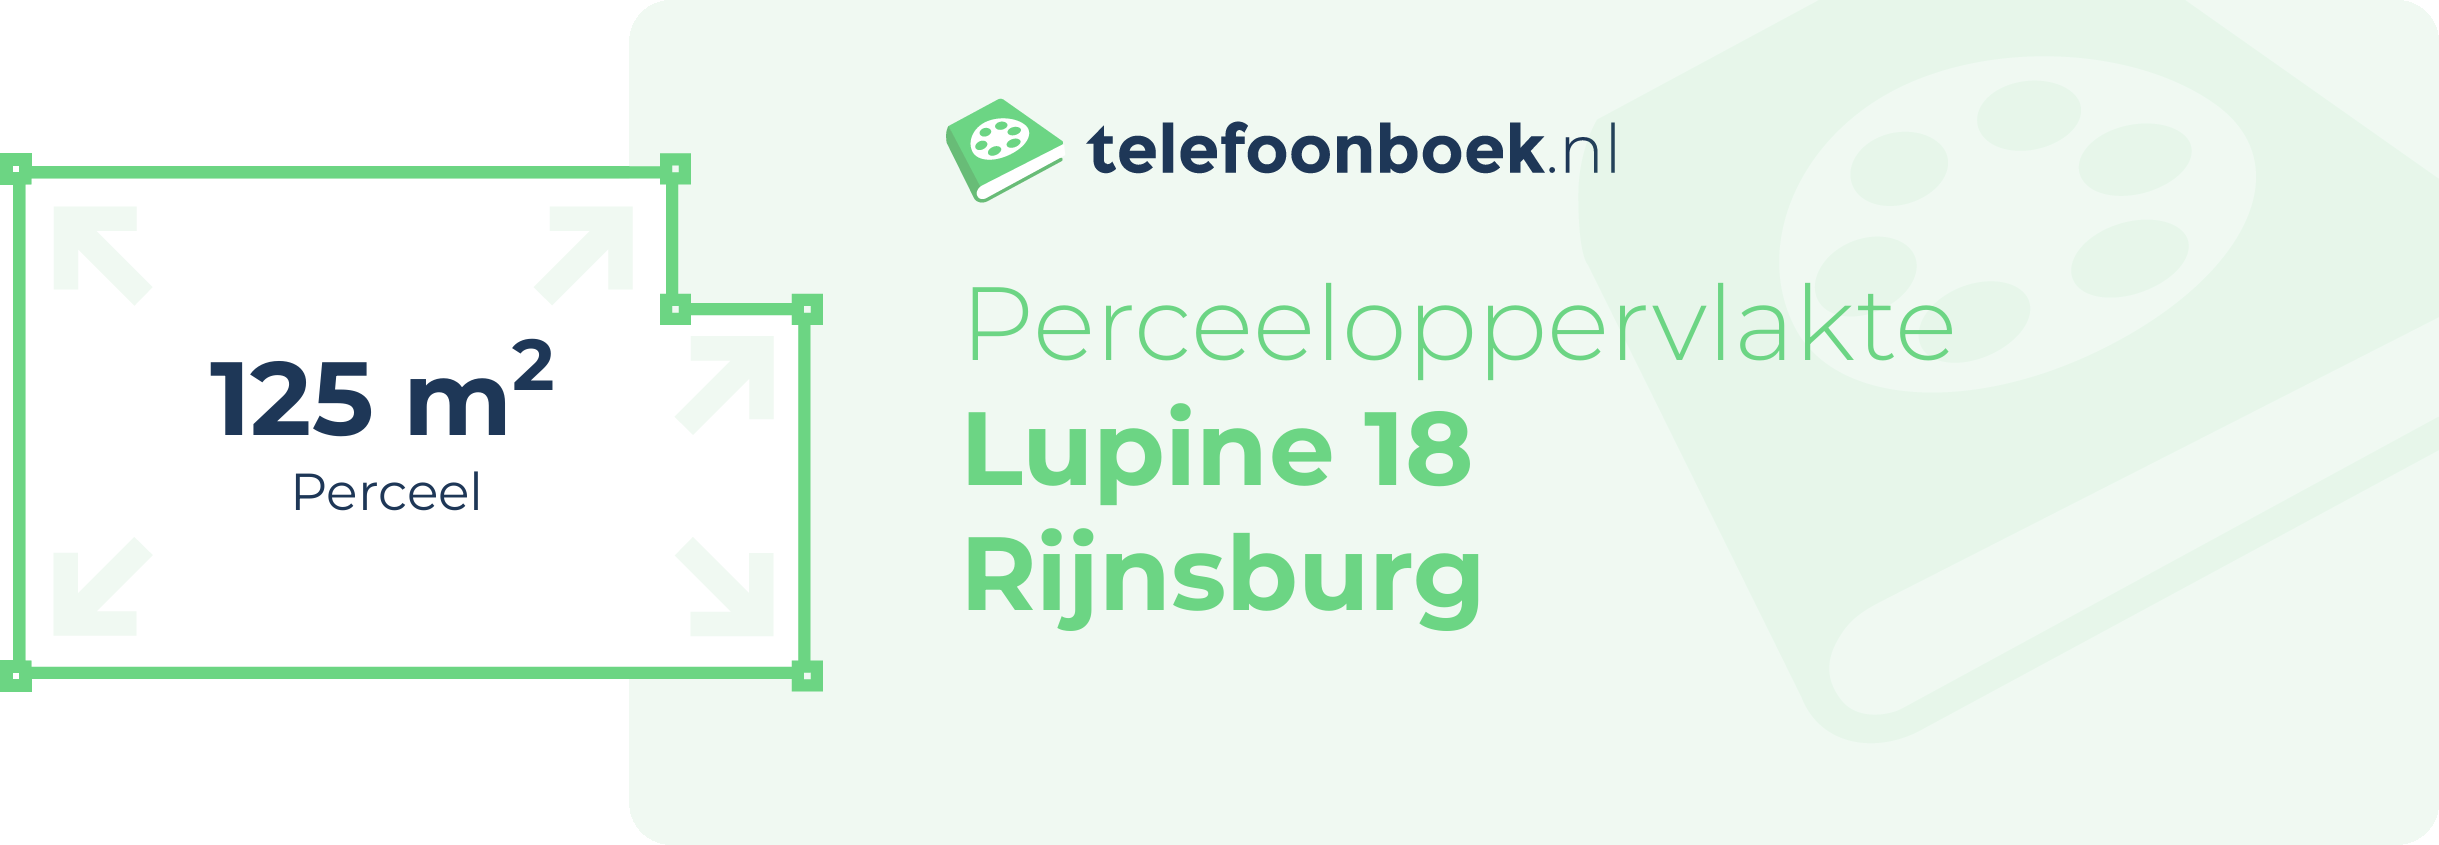 Perceeloppervlakte Lupine 18 Rijnsburg